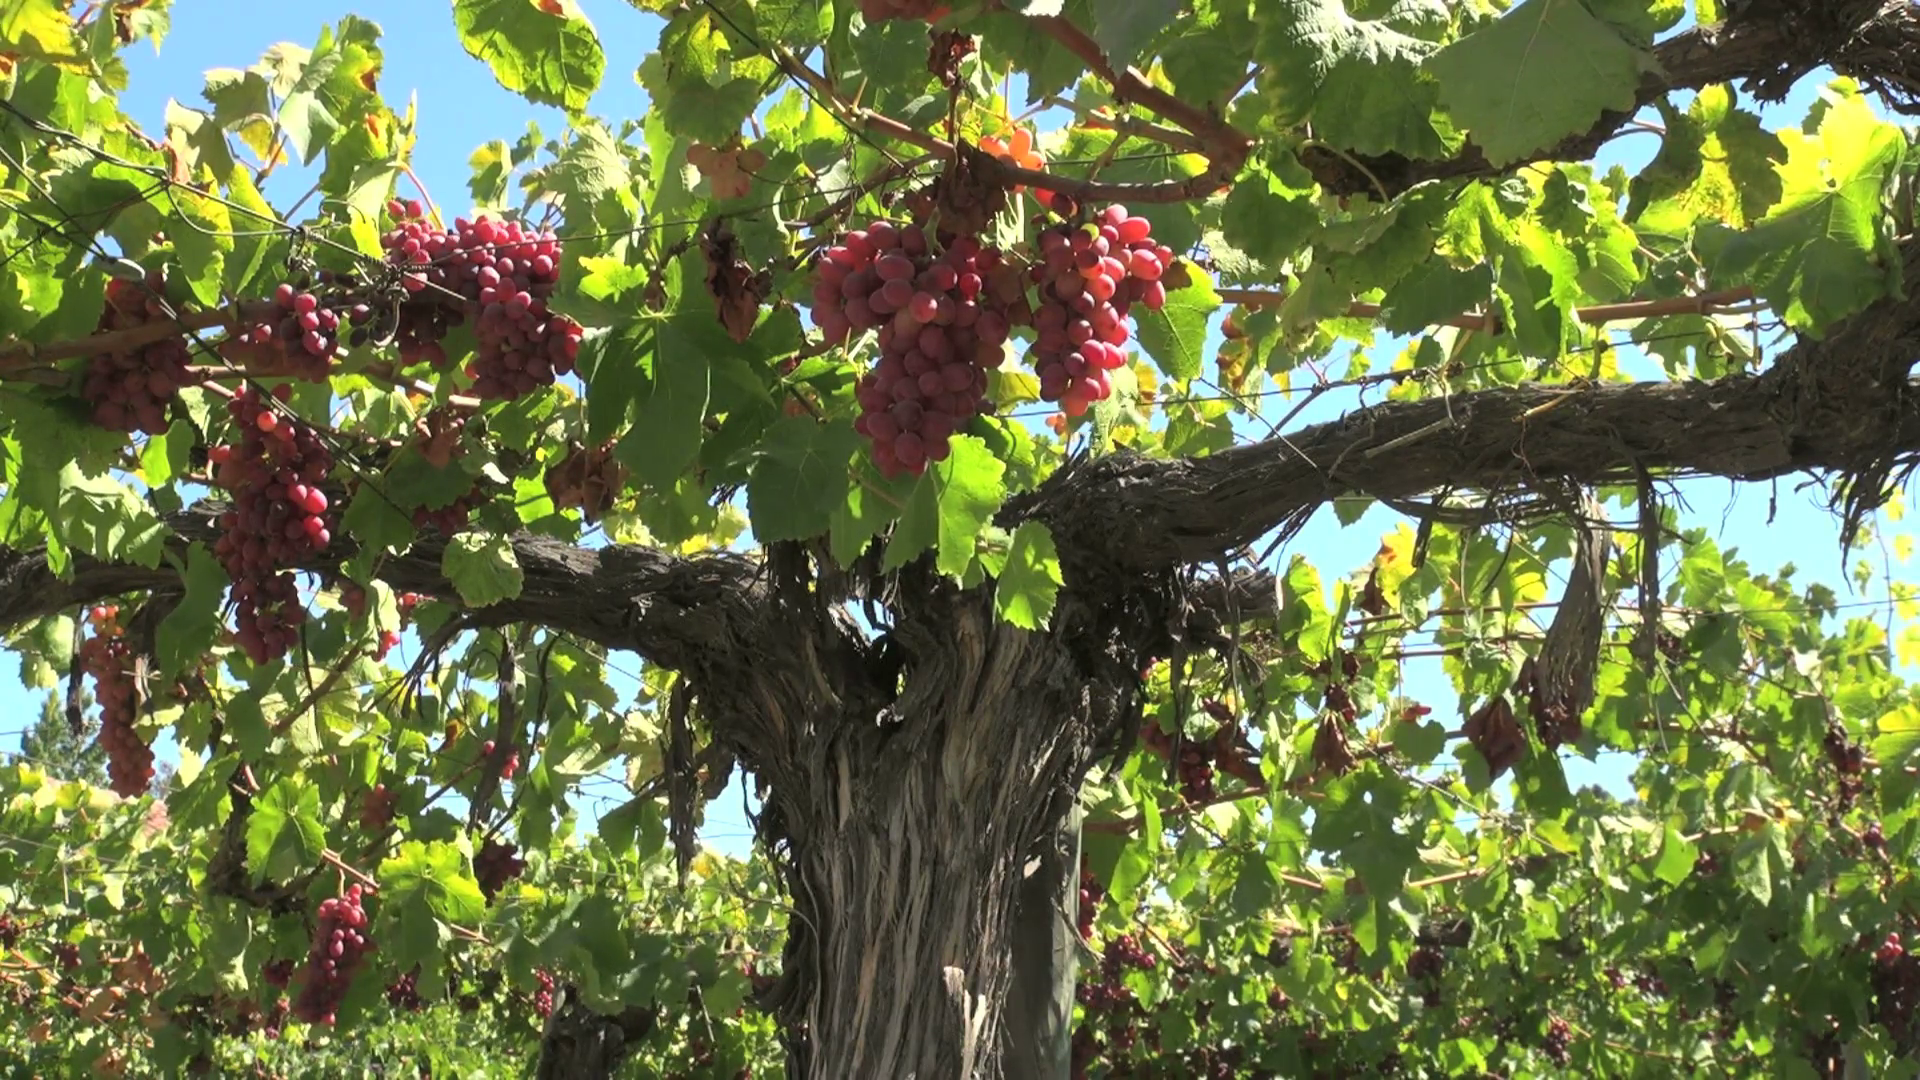 Grapes on a Tree 2 Stock Video Footage - VideoBlocks